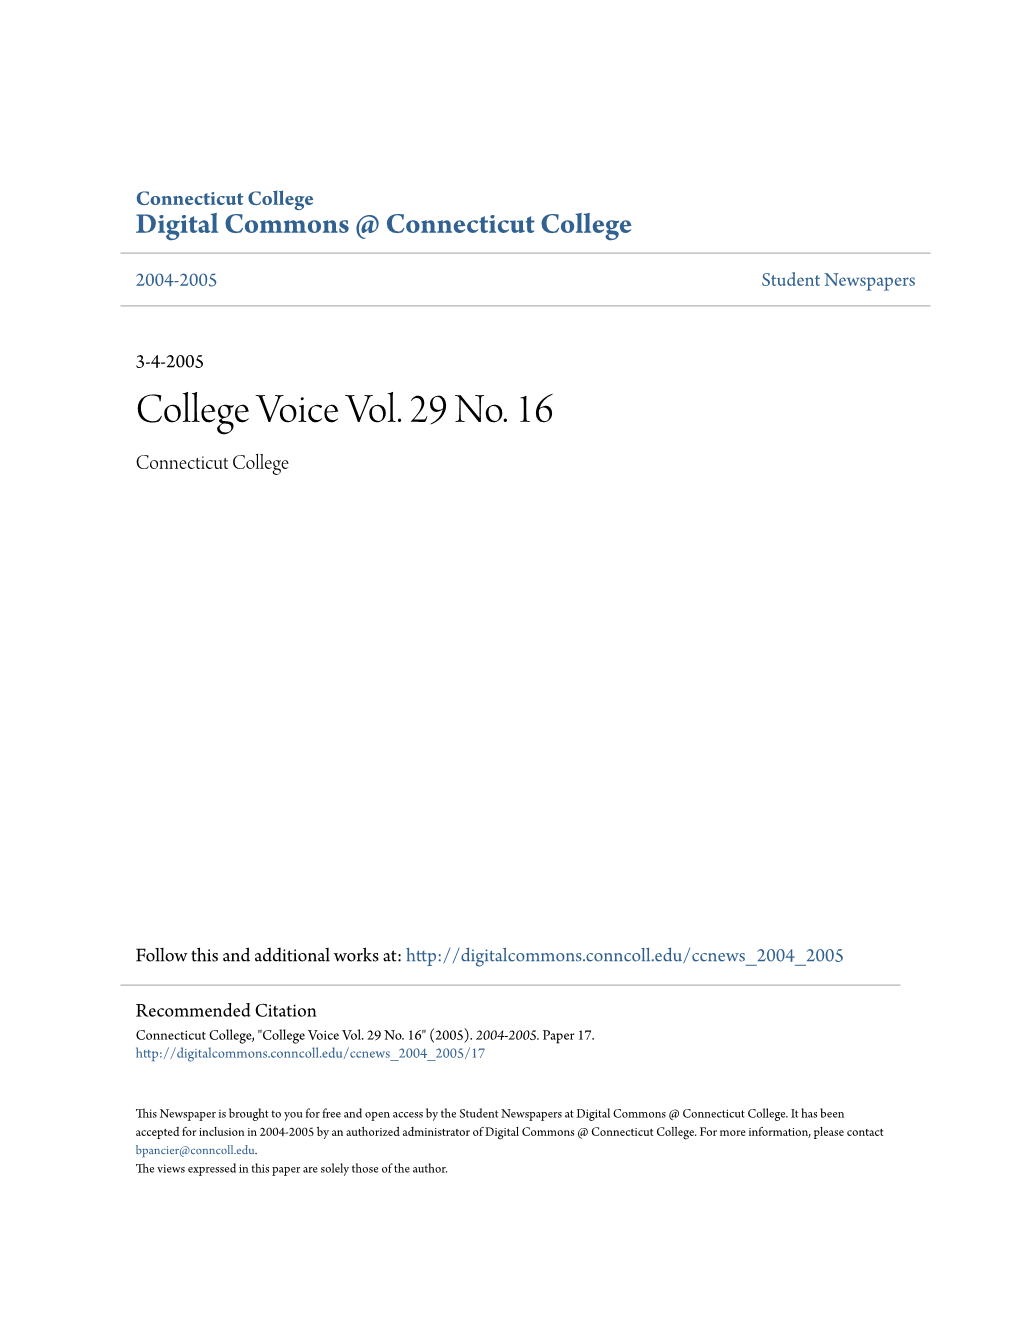 College Voice Vol. 29 No. 16 Connecticut College